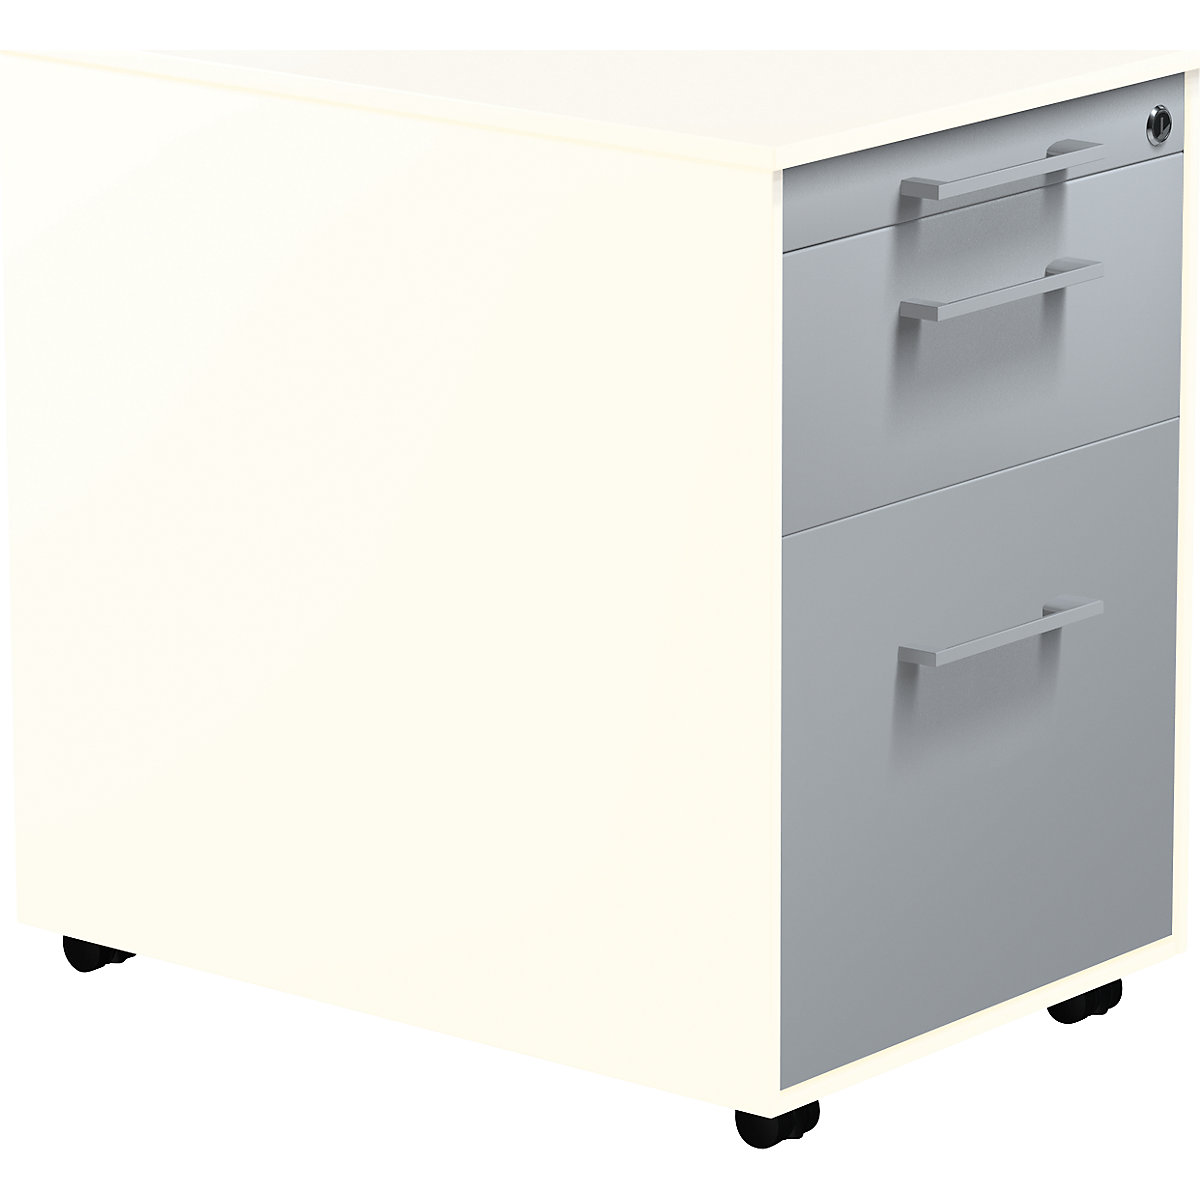 Pojízdný kontejner – mauser, v x h 570 x 600 mm, 1 zásuvka na materiál, 1 kartotéka pro závěsné složky, čistá bílá / hliníková stříbrná / čistá bílá-2